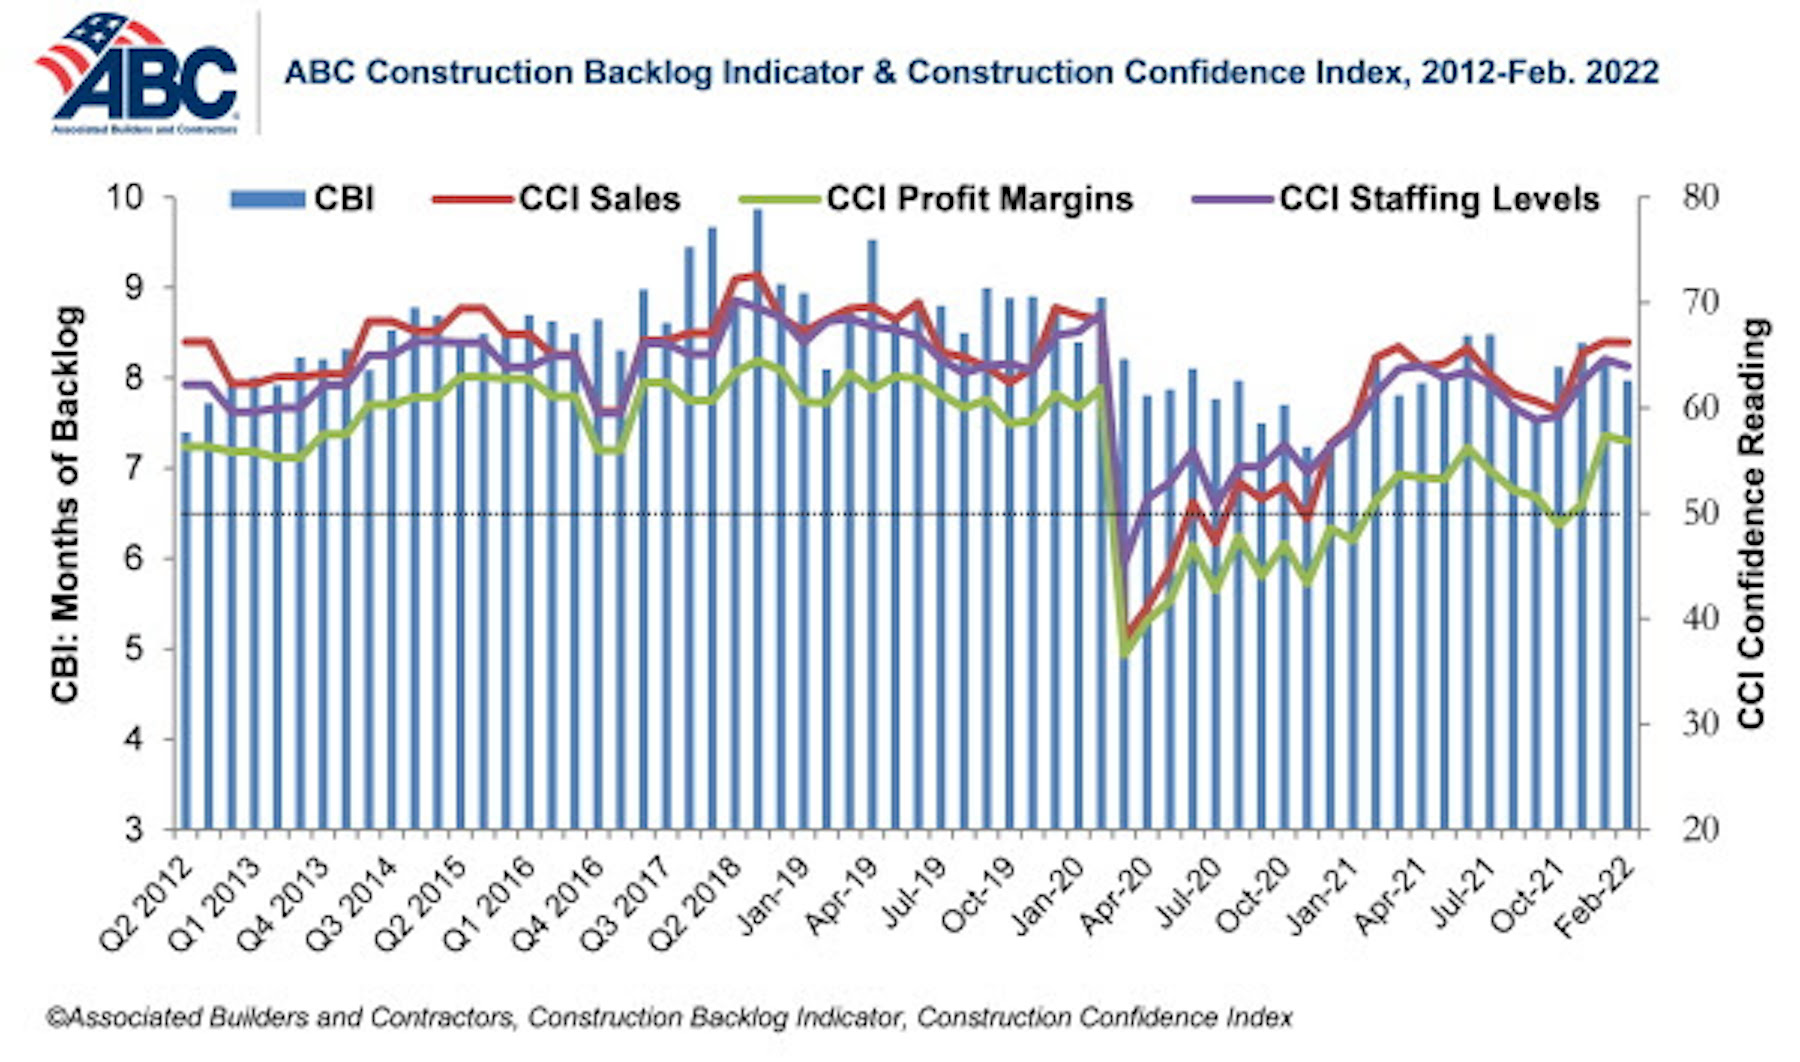 ABC Construction Backlog Indicator & Construction Confidence Index